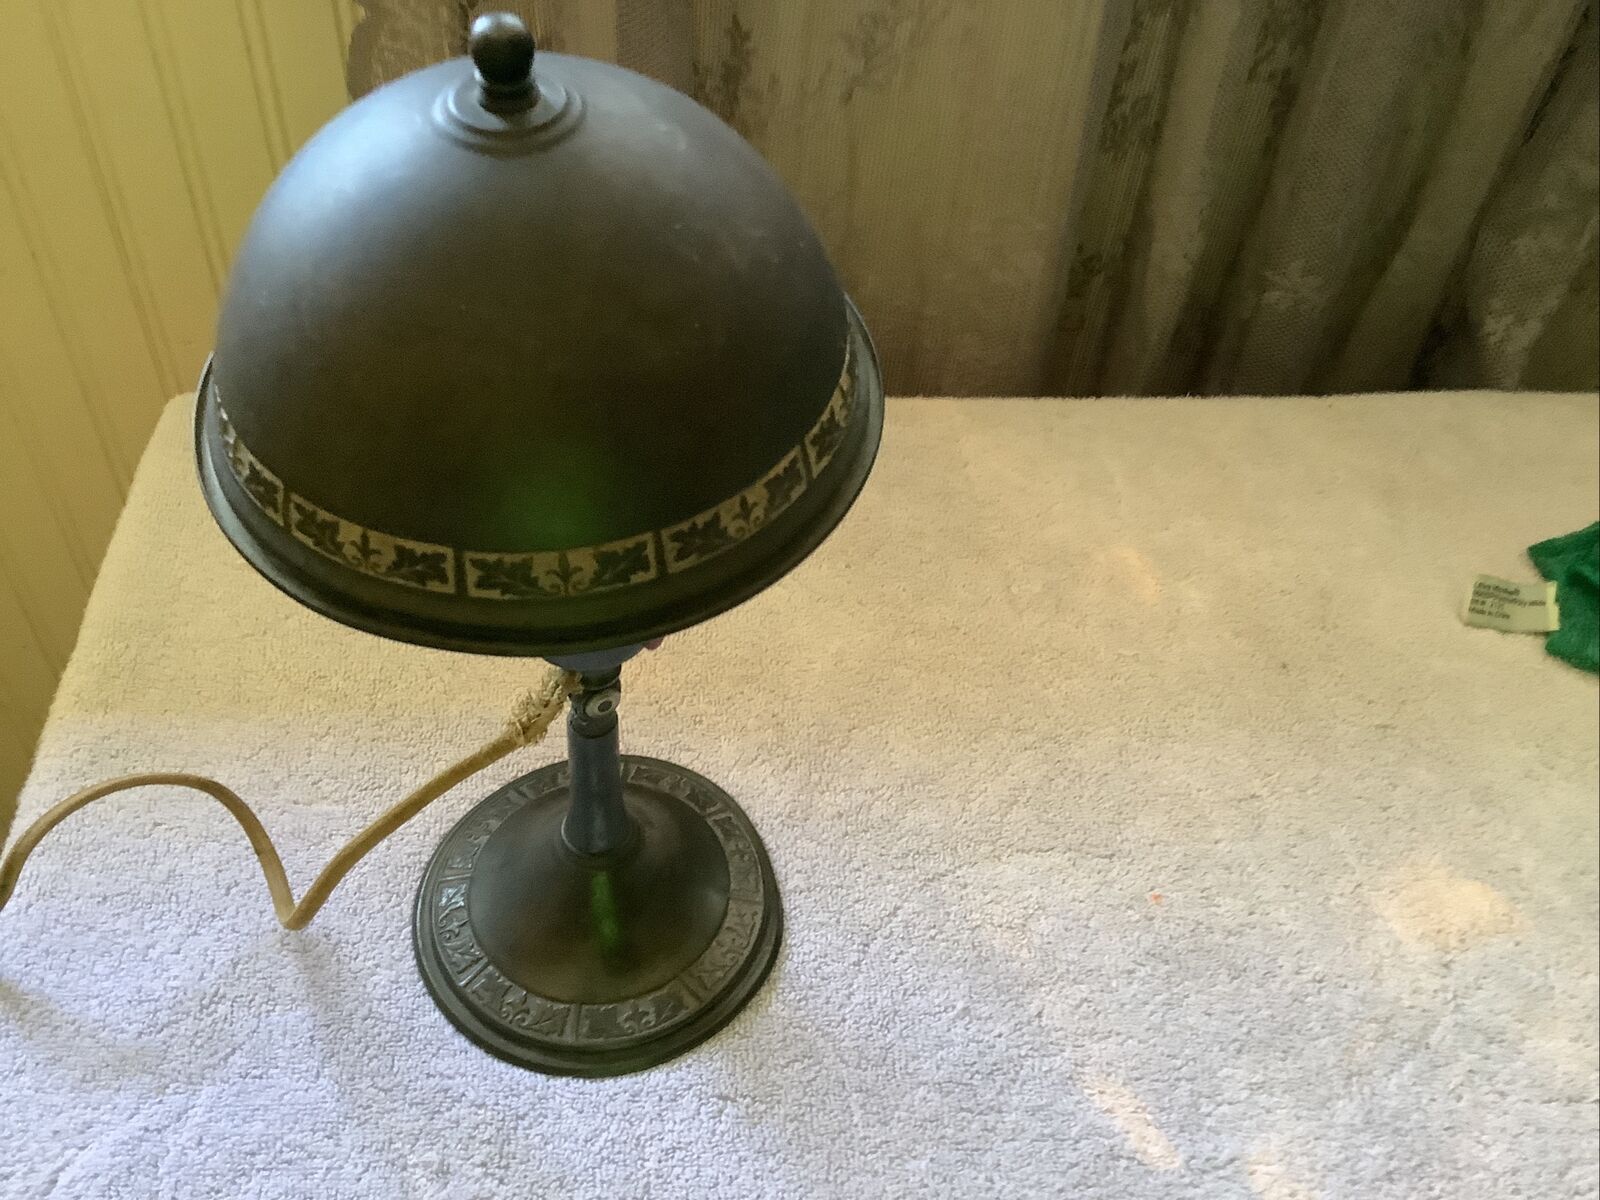 The Greist Mfg Co Desk Lamp Super Adjustable Antique Lighting New Haven Conn Vtg